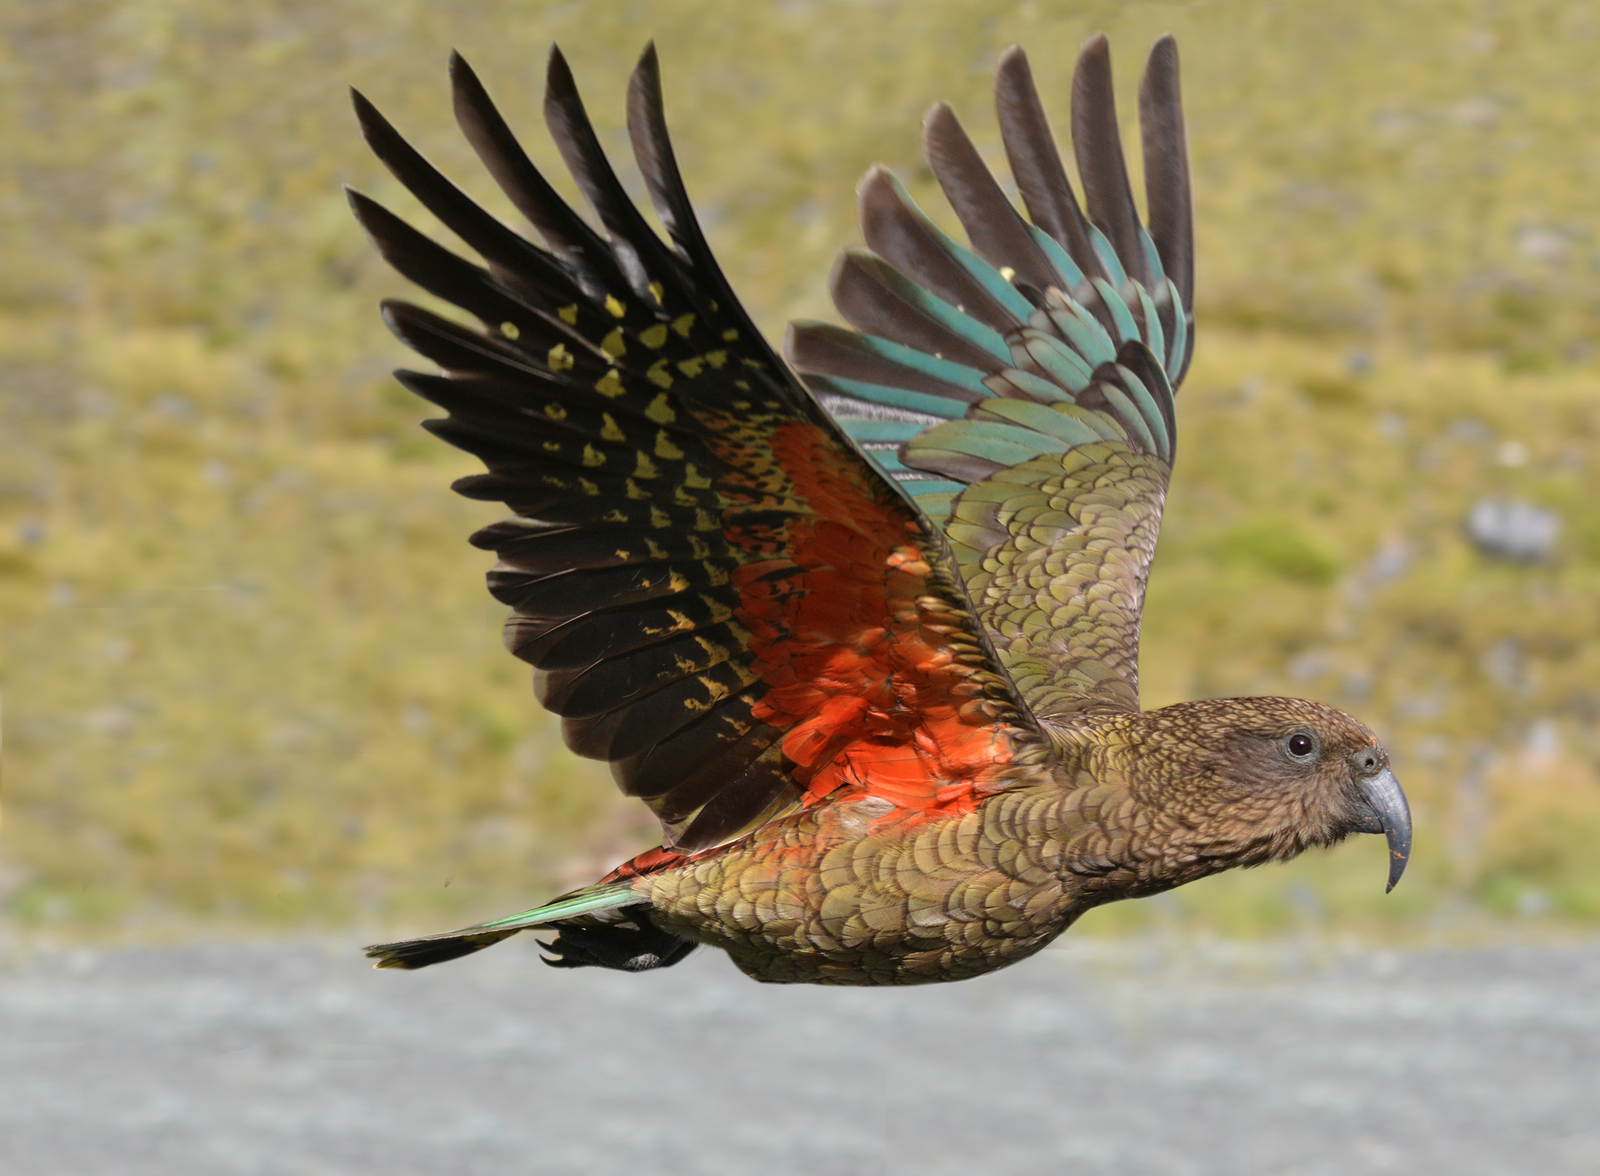 Kea parrot (Nestor notabilis) fly in motion in Fiordland, New Zealand. Image Credit: © Rafael Ben Ari | Dreamstime.com.